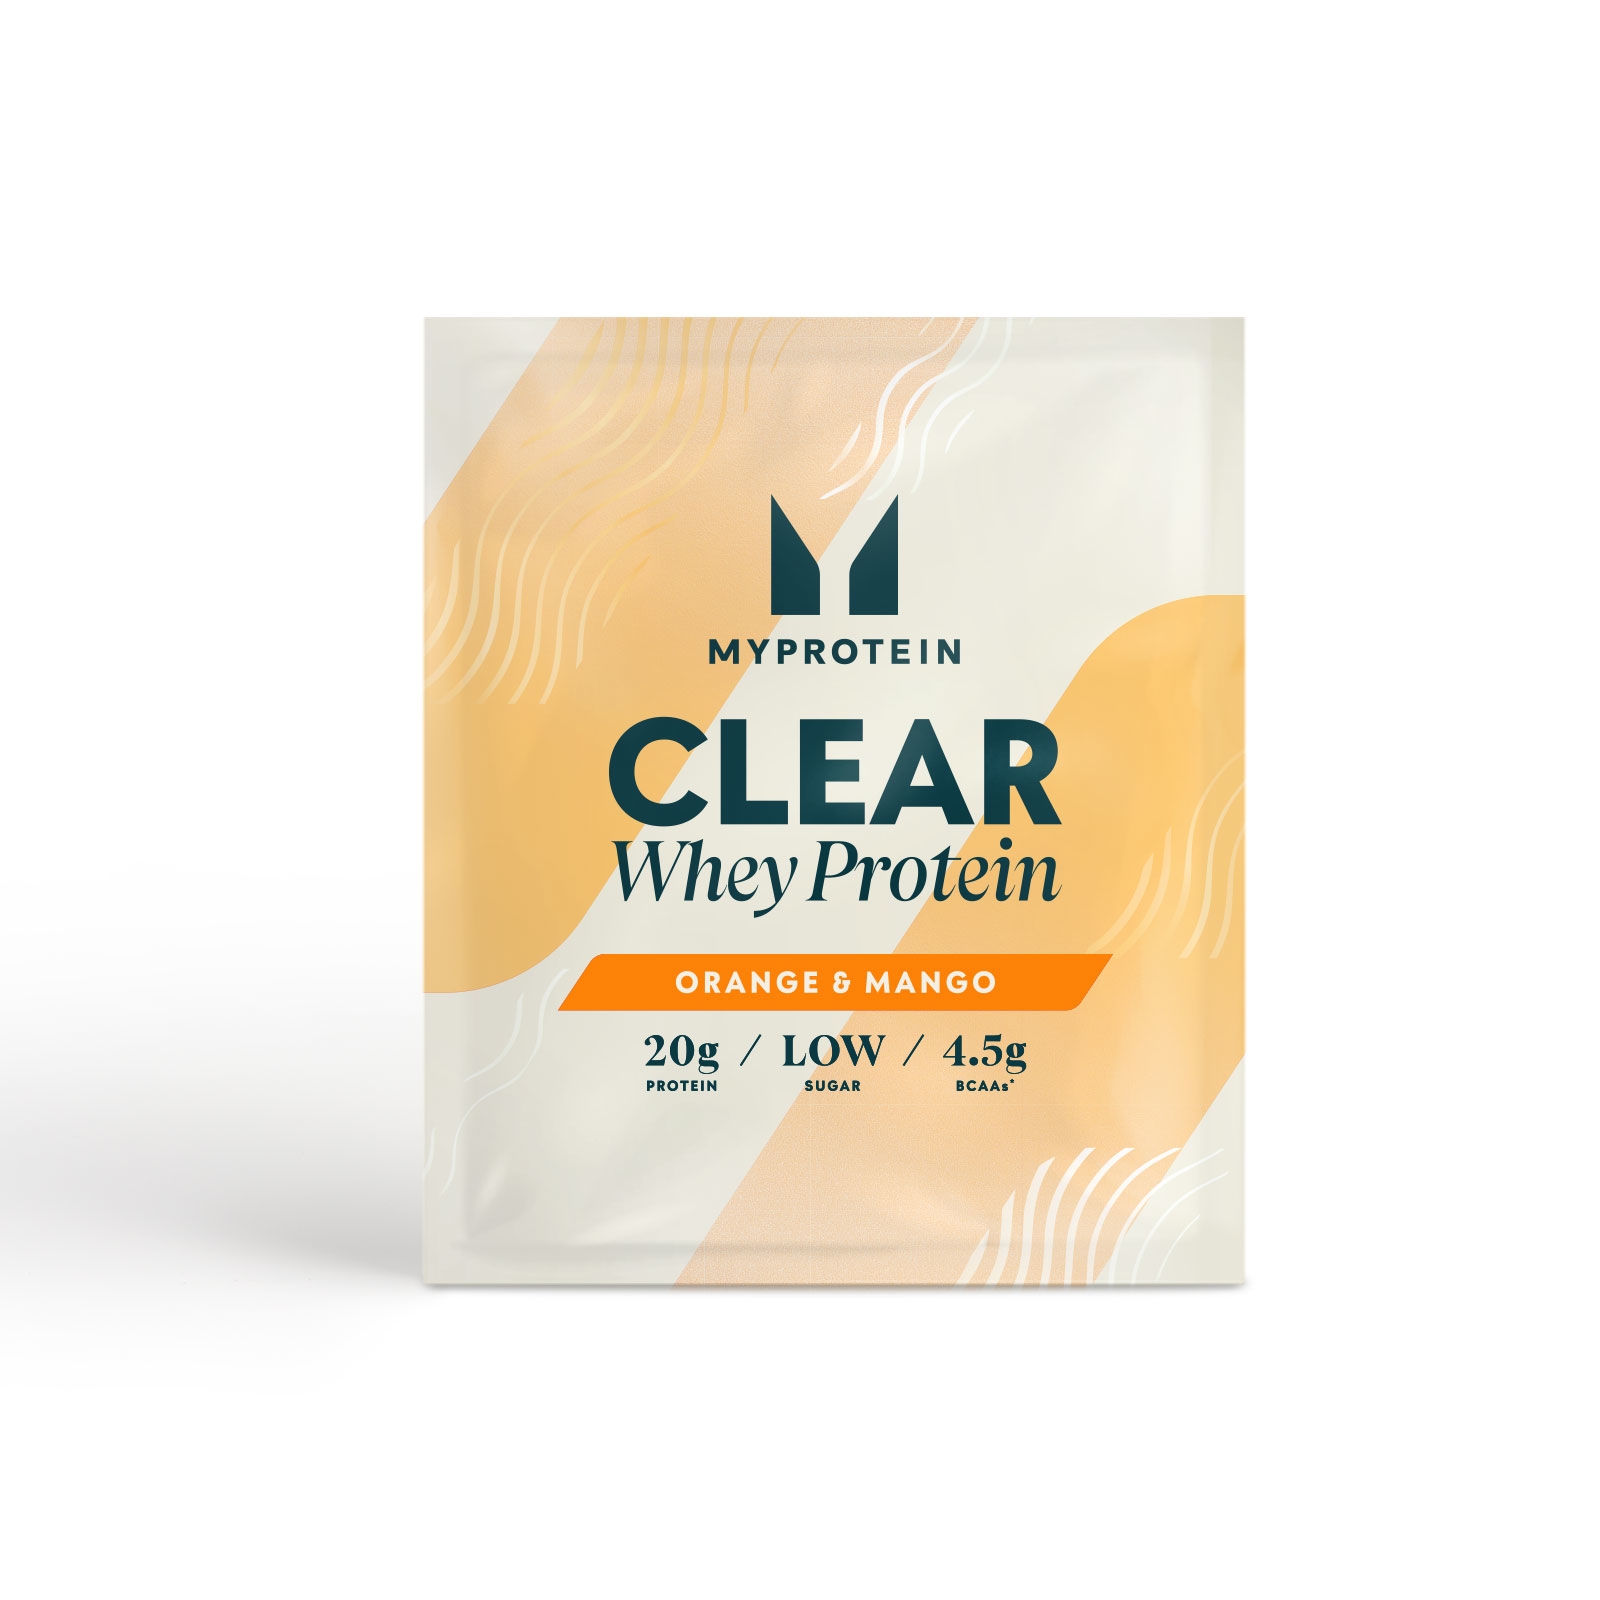 Clear Whey Protein (Sample) - 1servings - Orange Mango